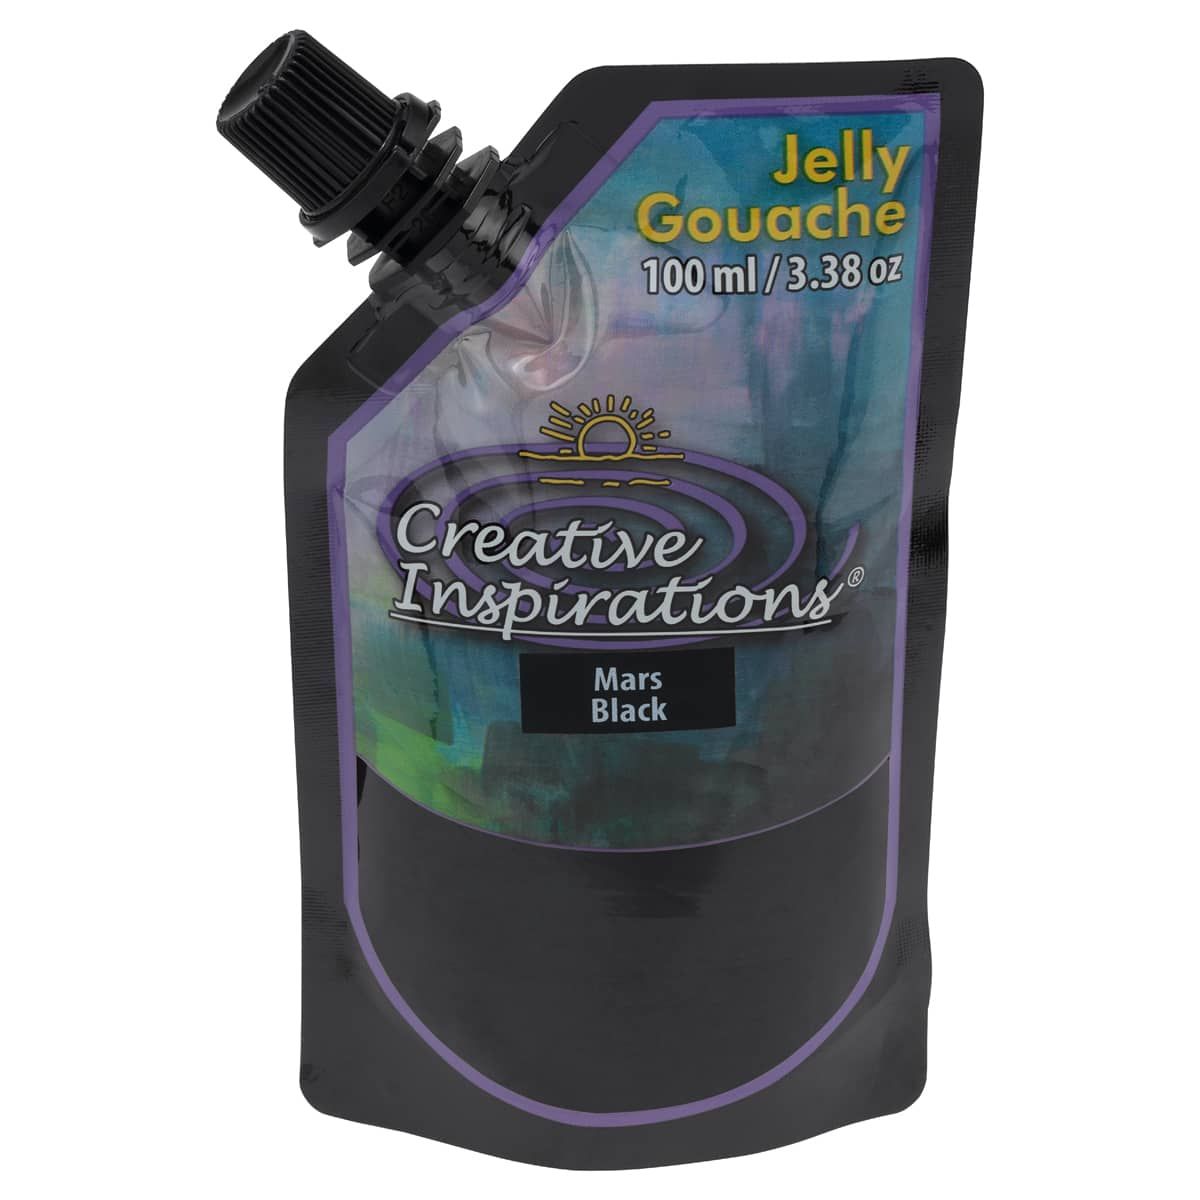 Creative Inspirations Jelly Gouache Pouch - Mars Black (100ml)